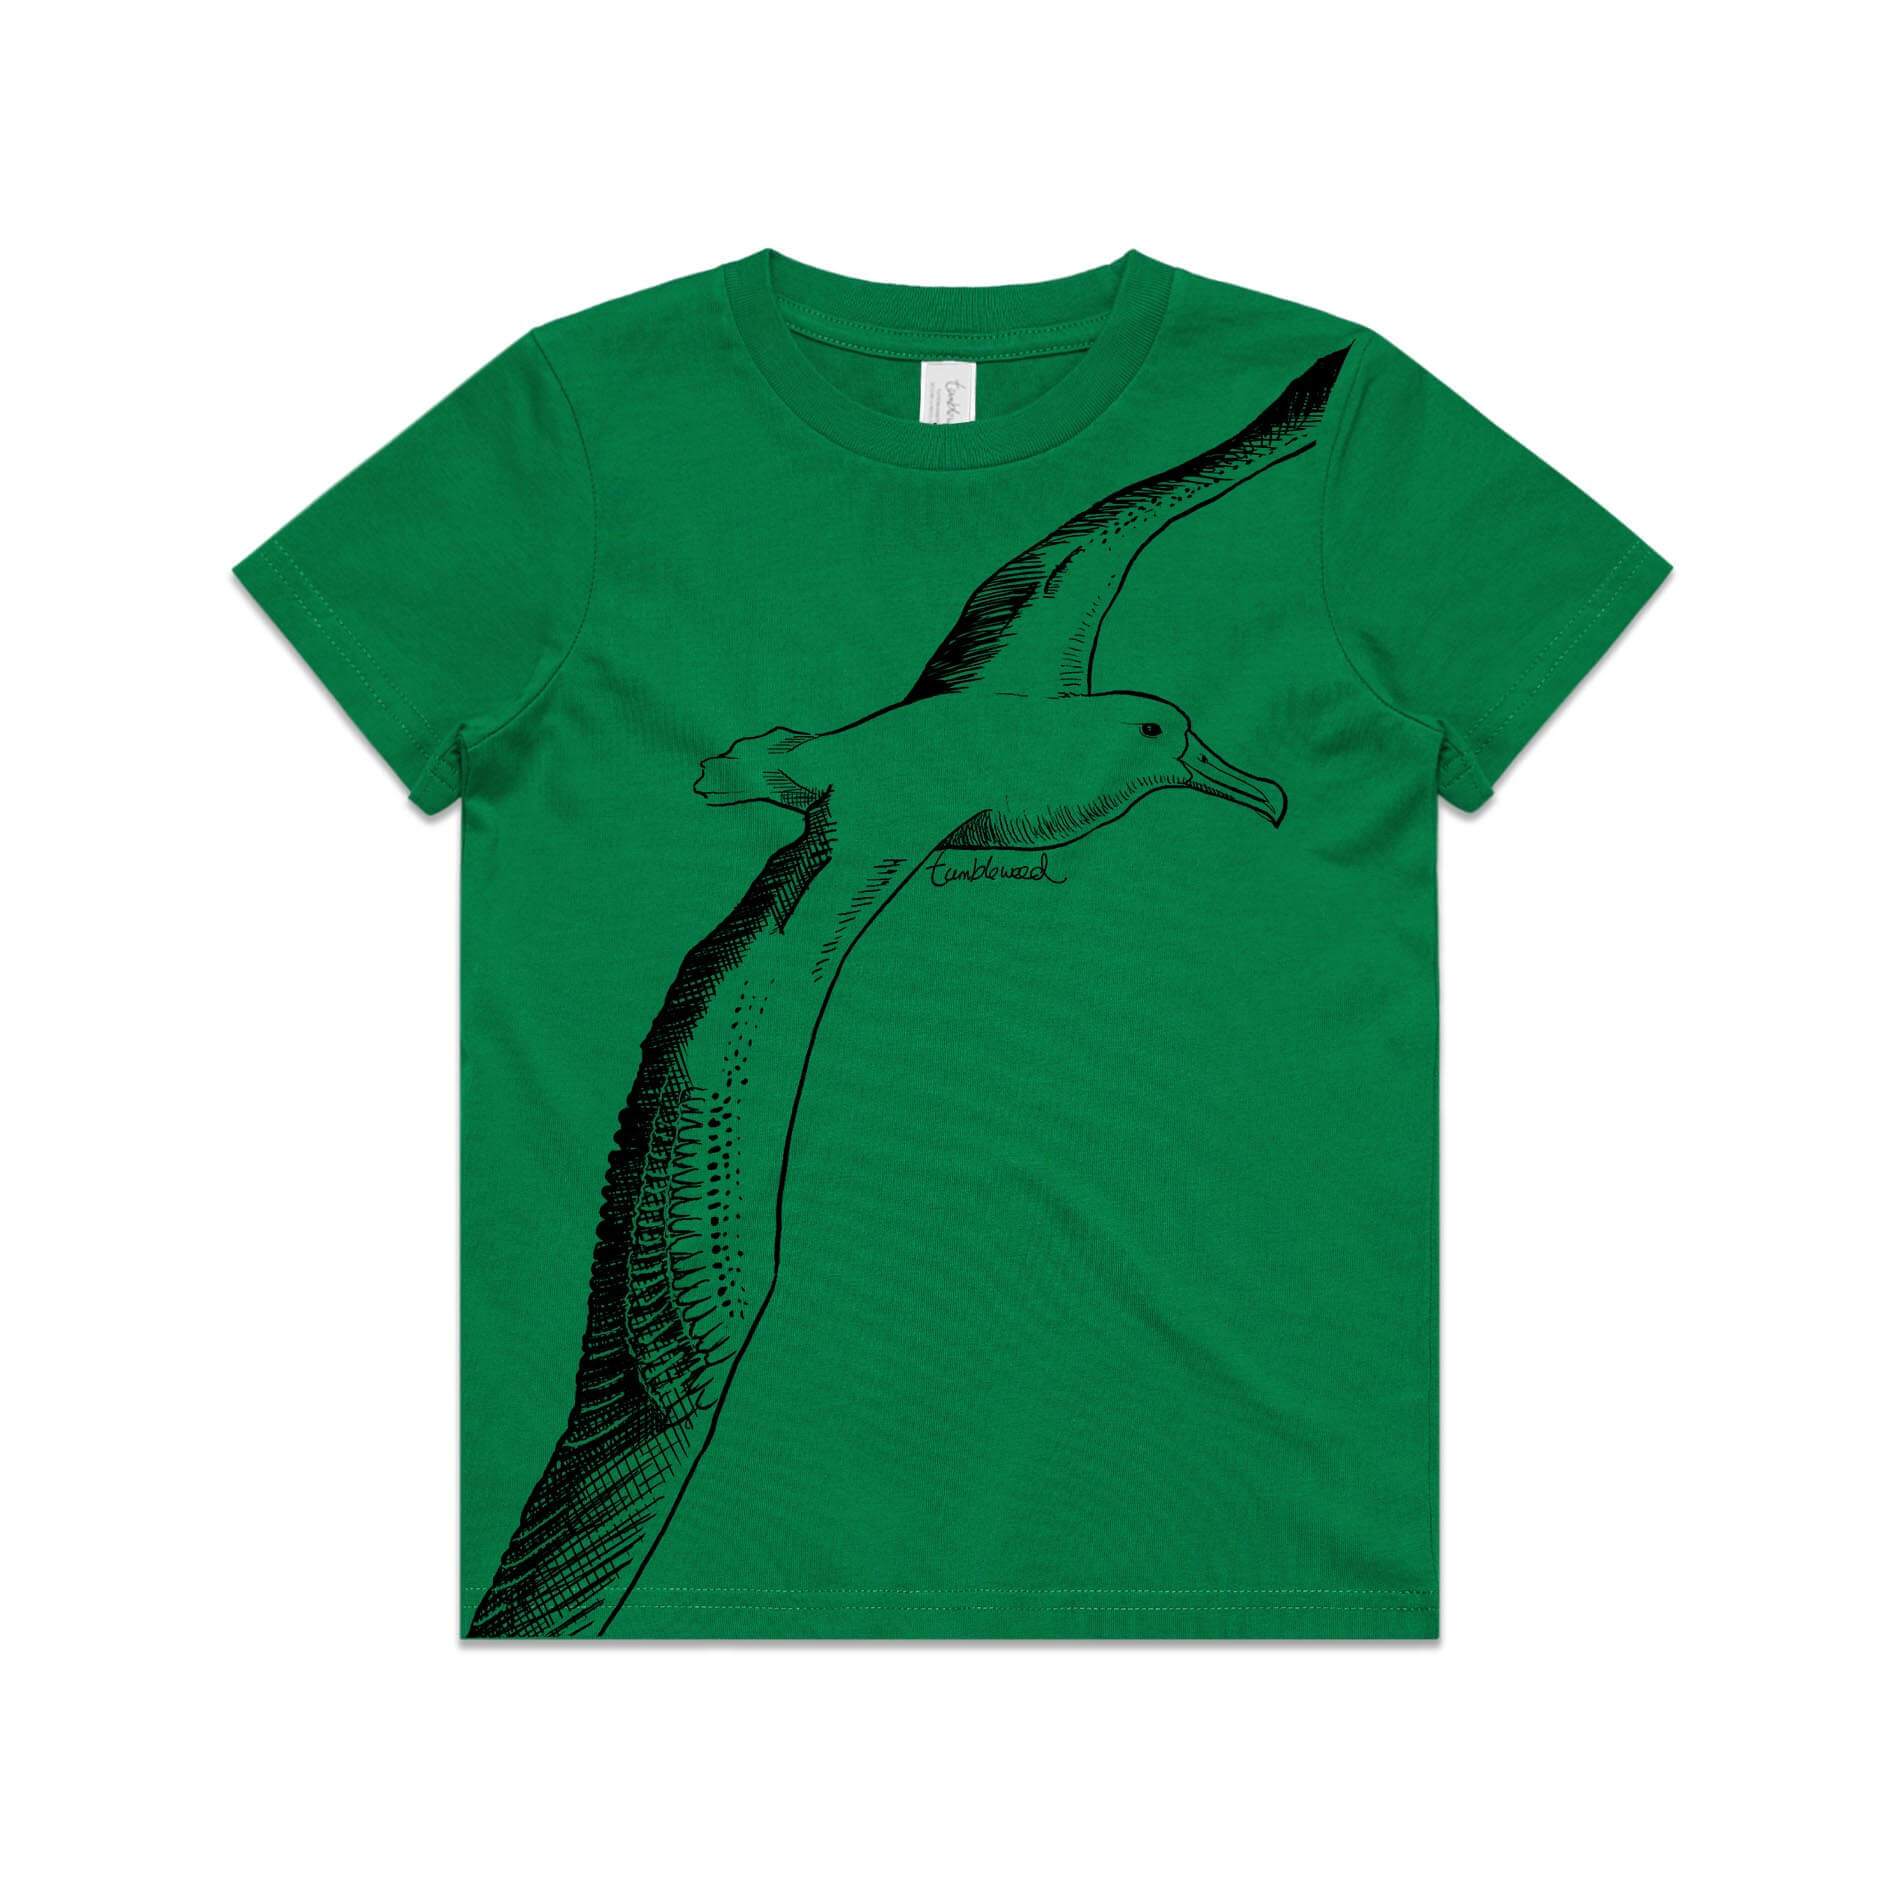 Green, cotton kids' t-shirt with screen printed albatross design.